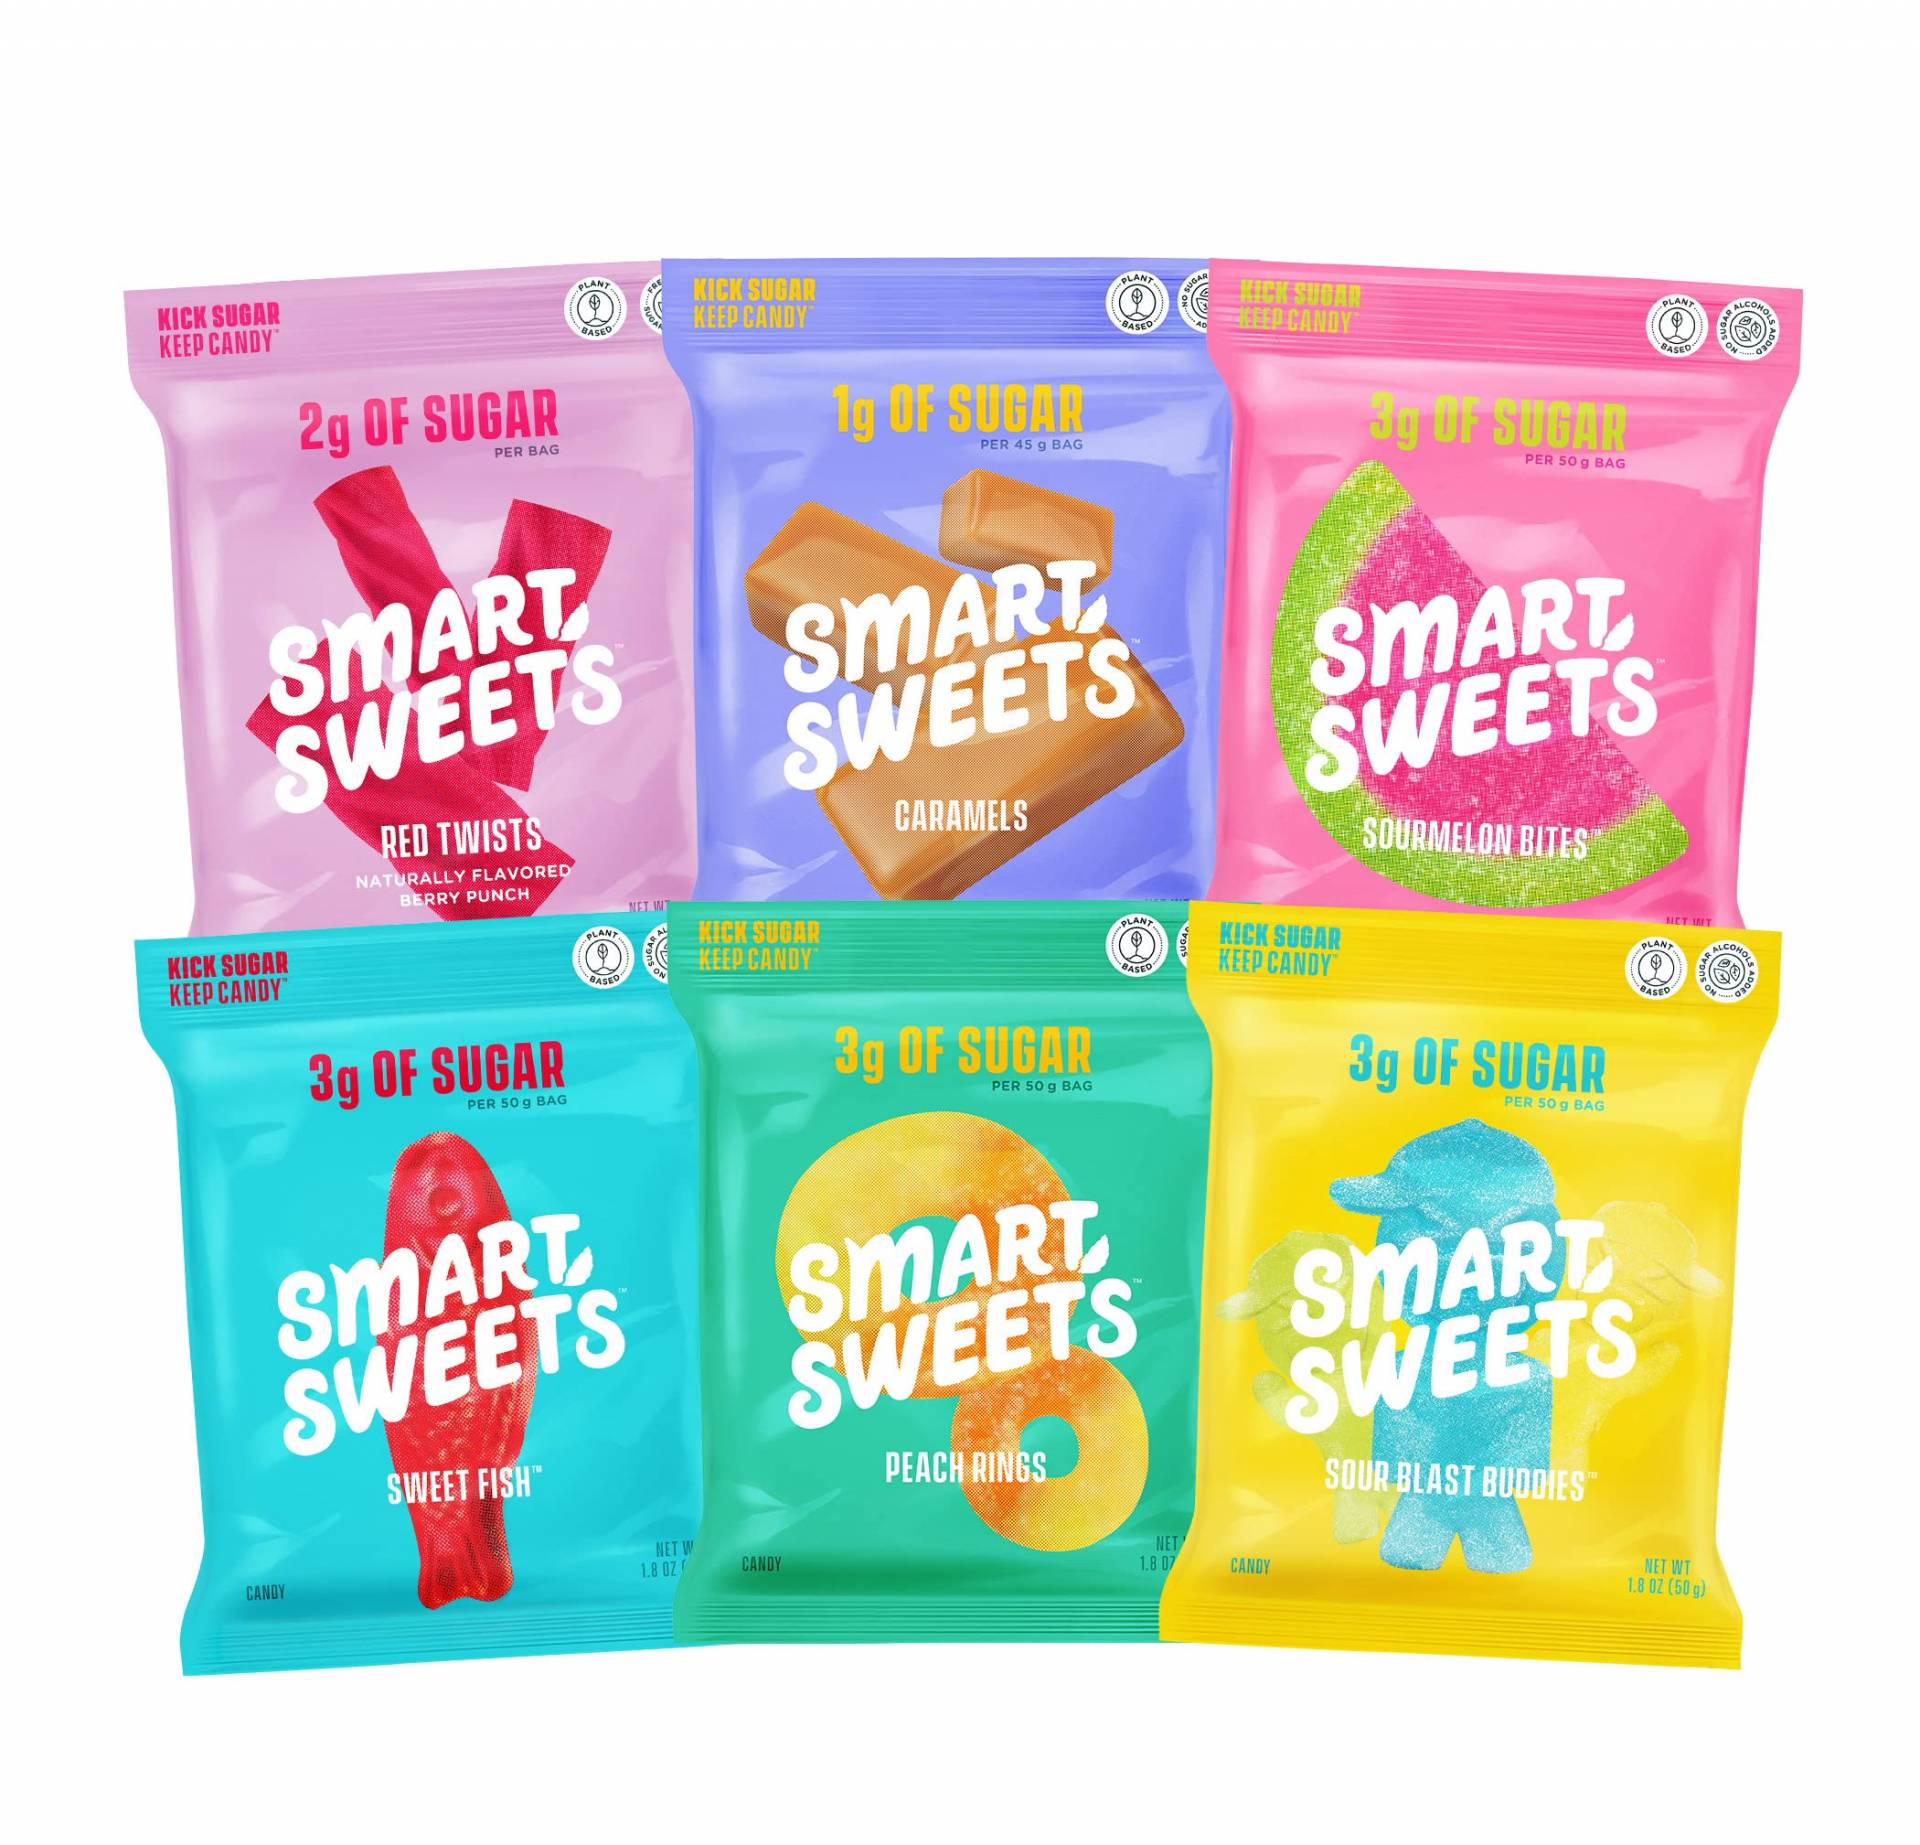 Smart Sweets - $4.99